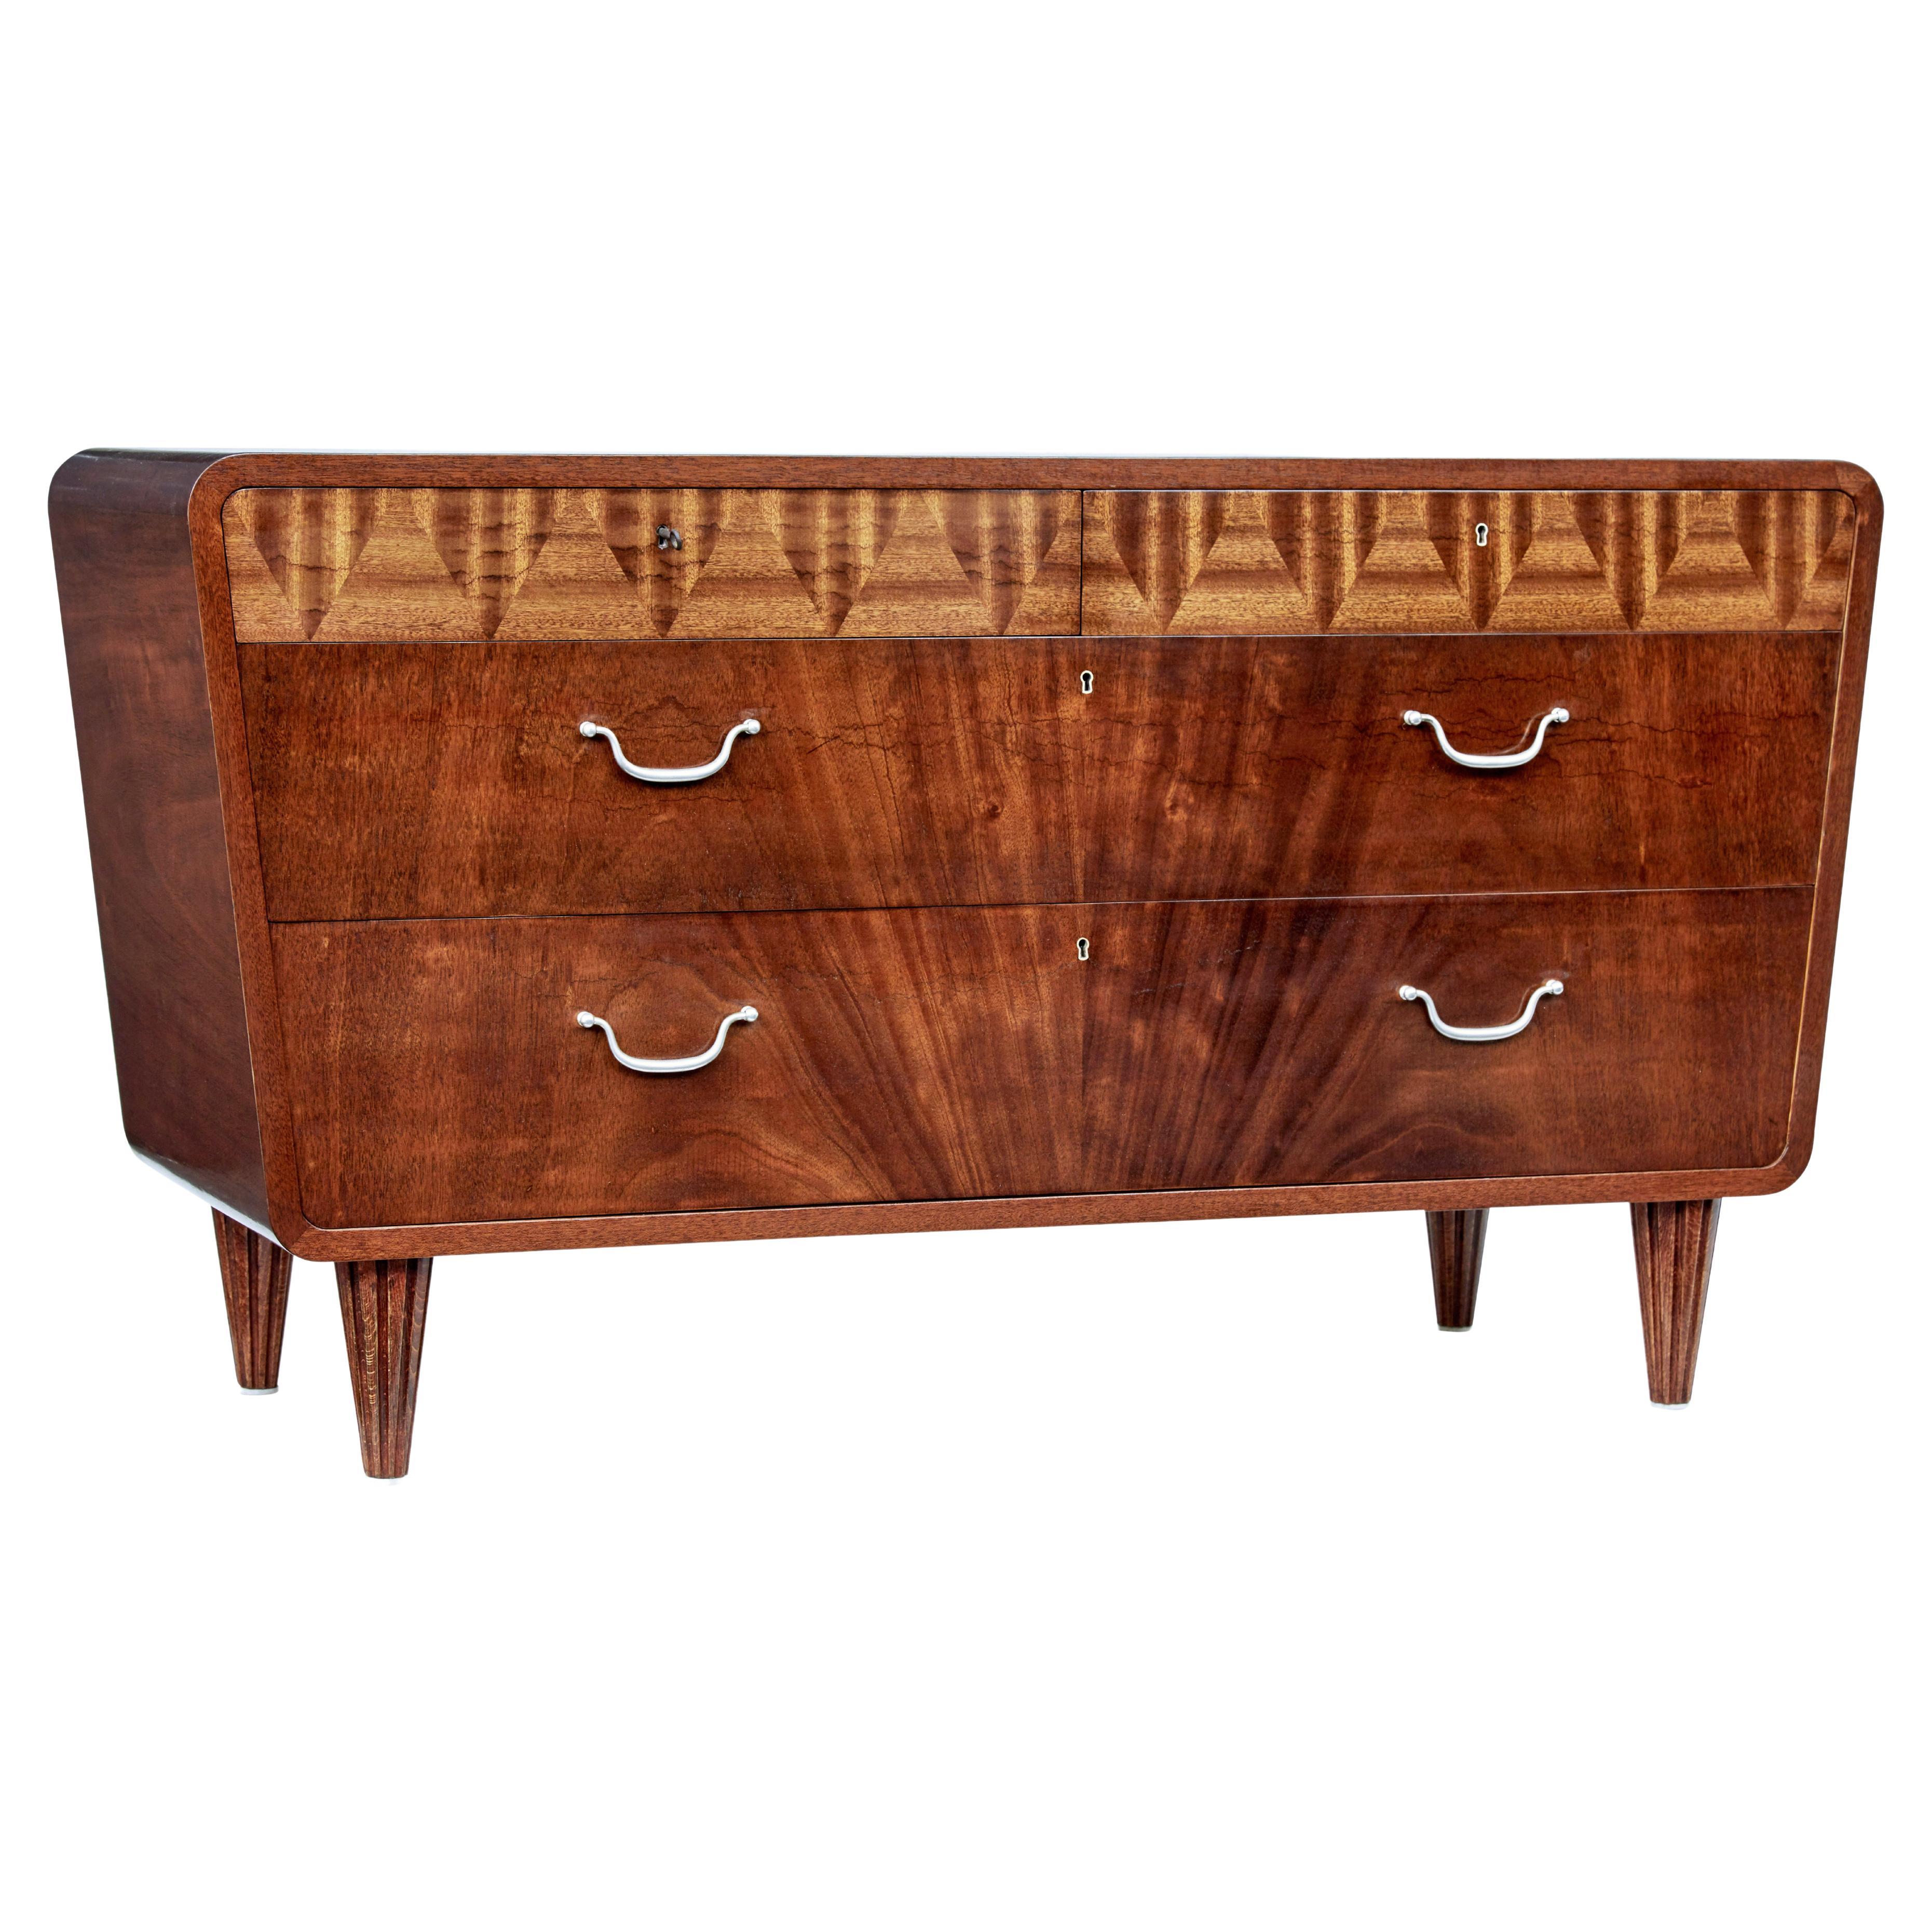 Mid 20th century Scandinavian modern mahogany chest of drawers